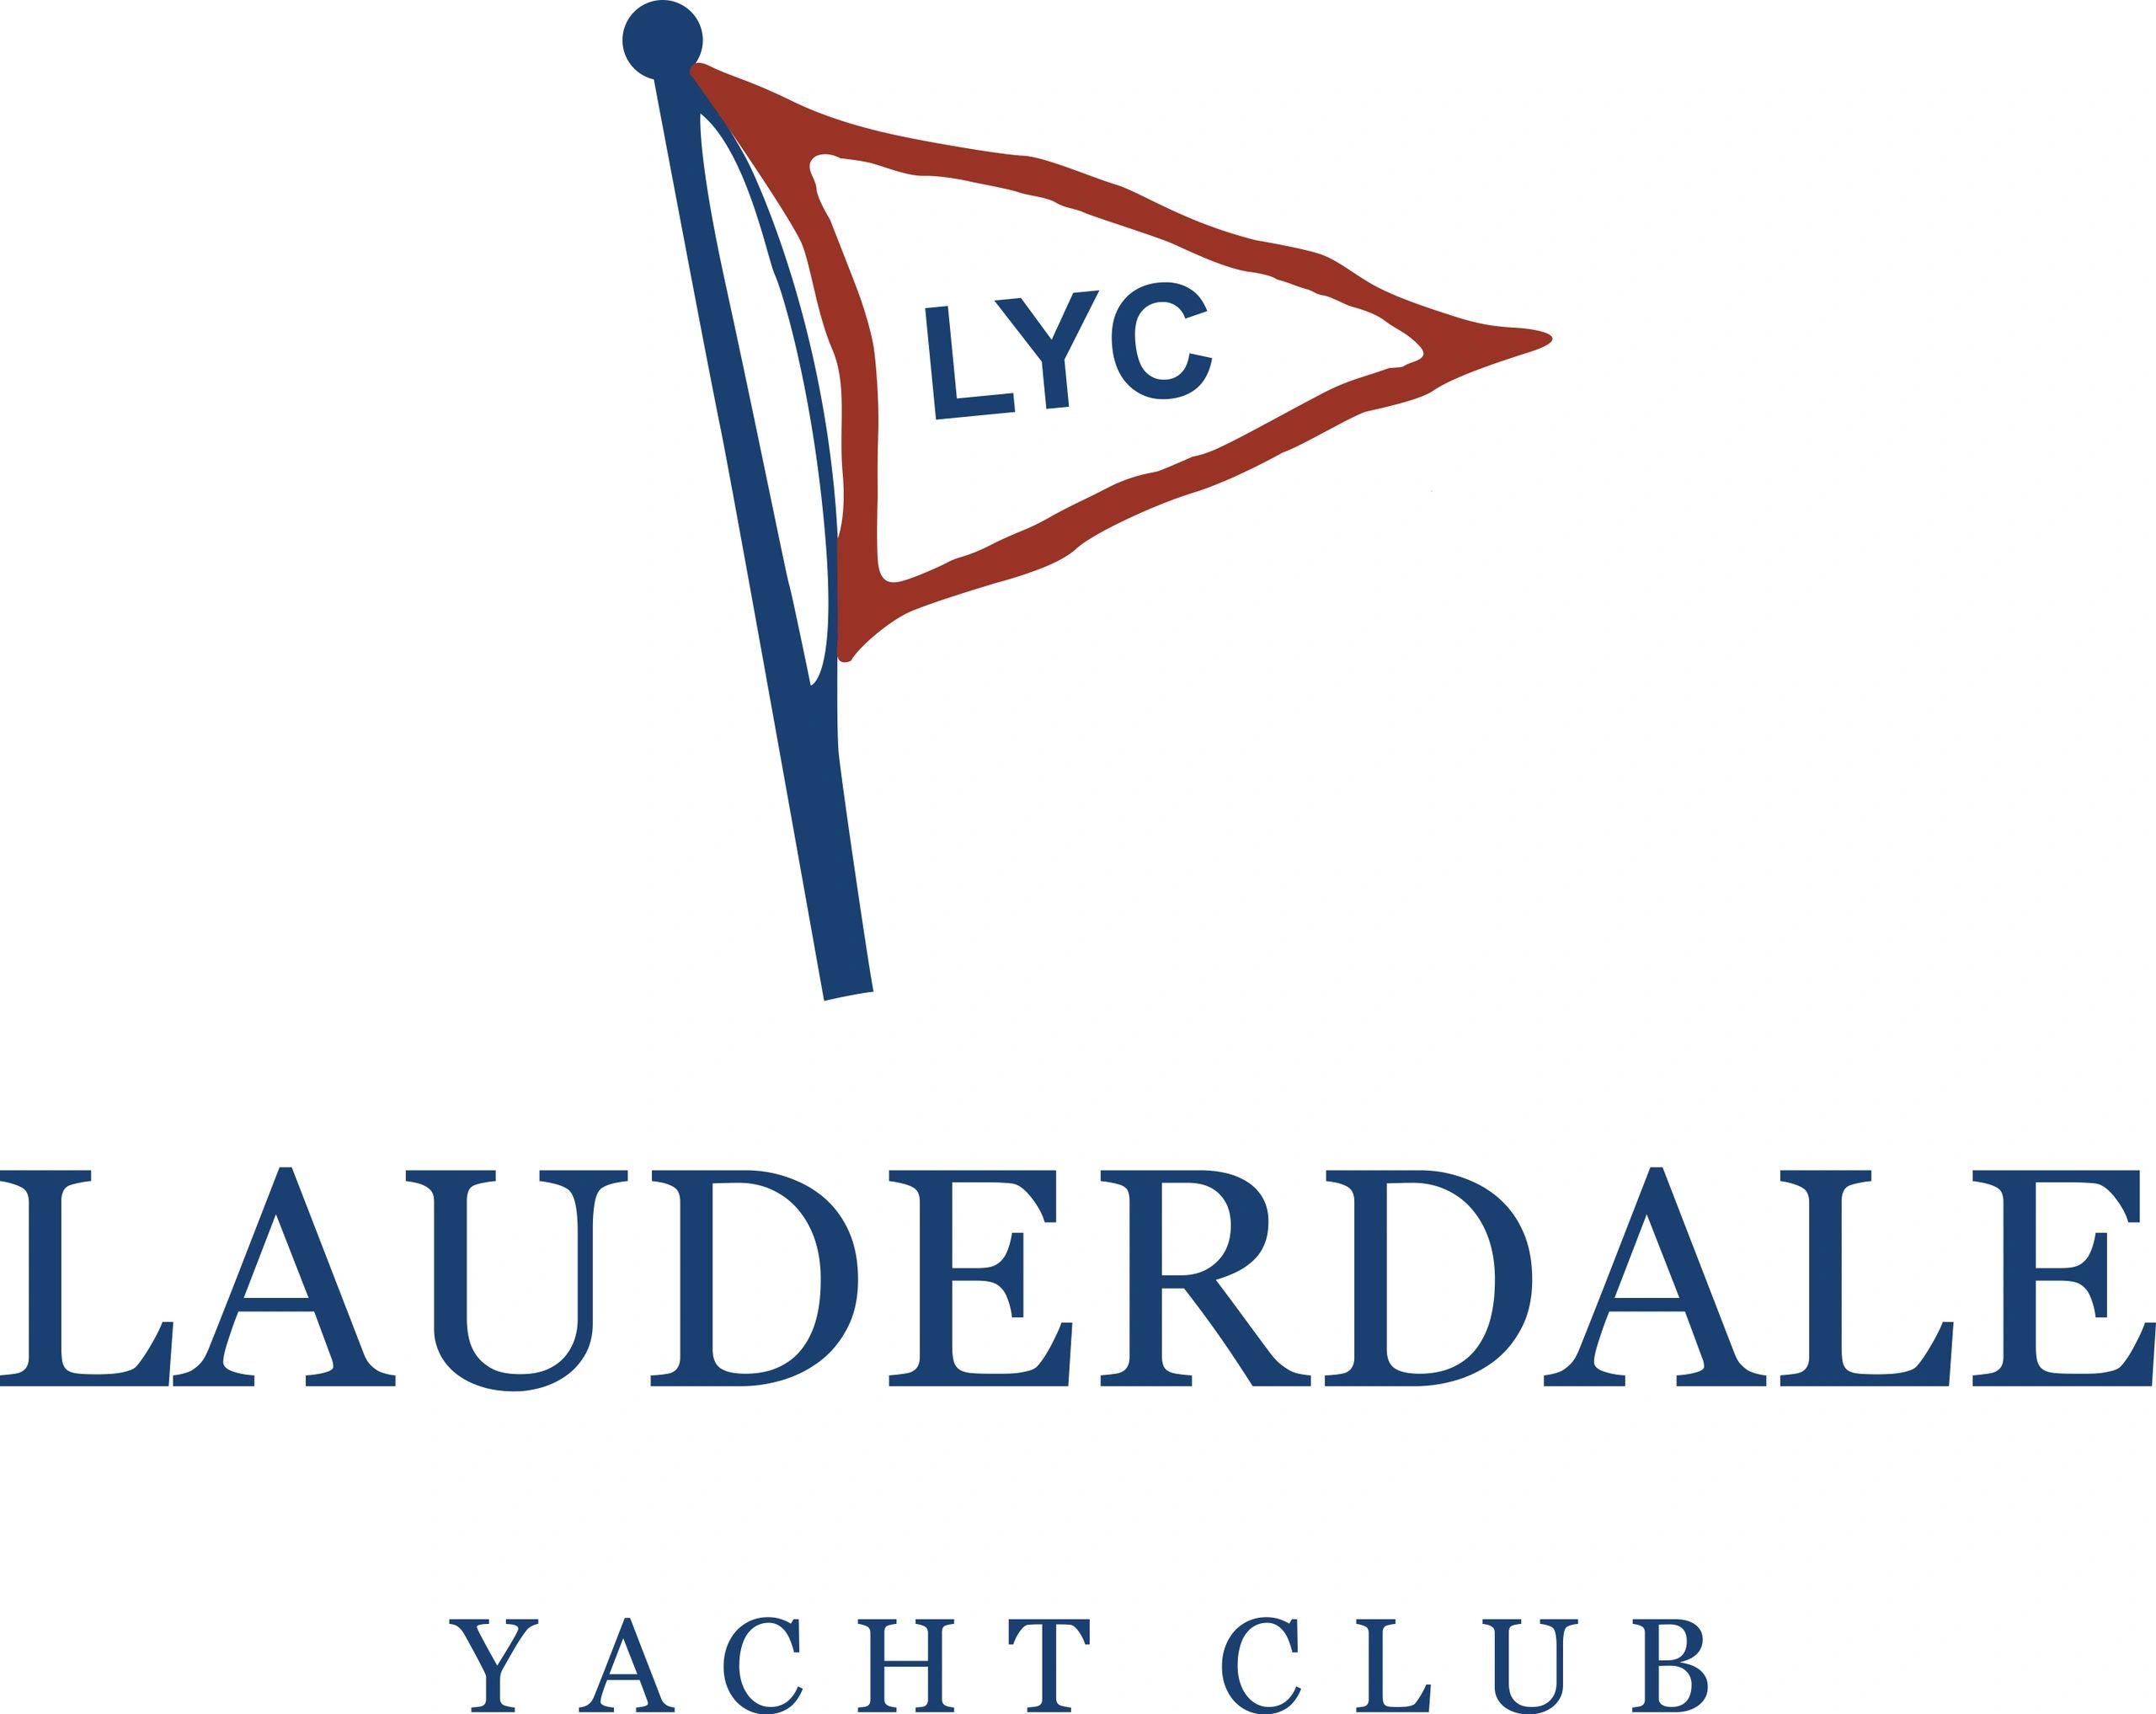 lauderdale yacht club membership fees